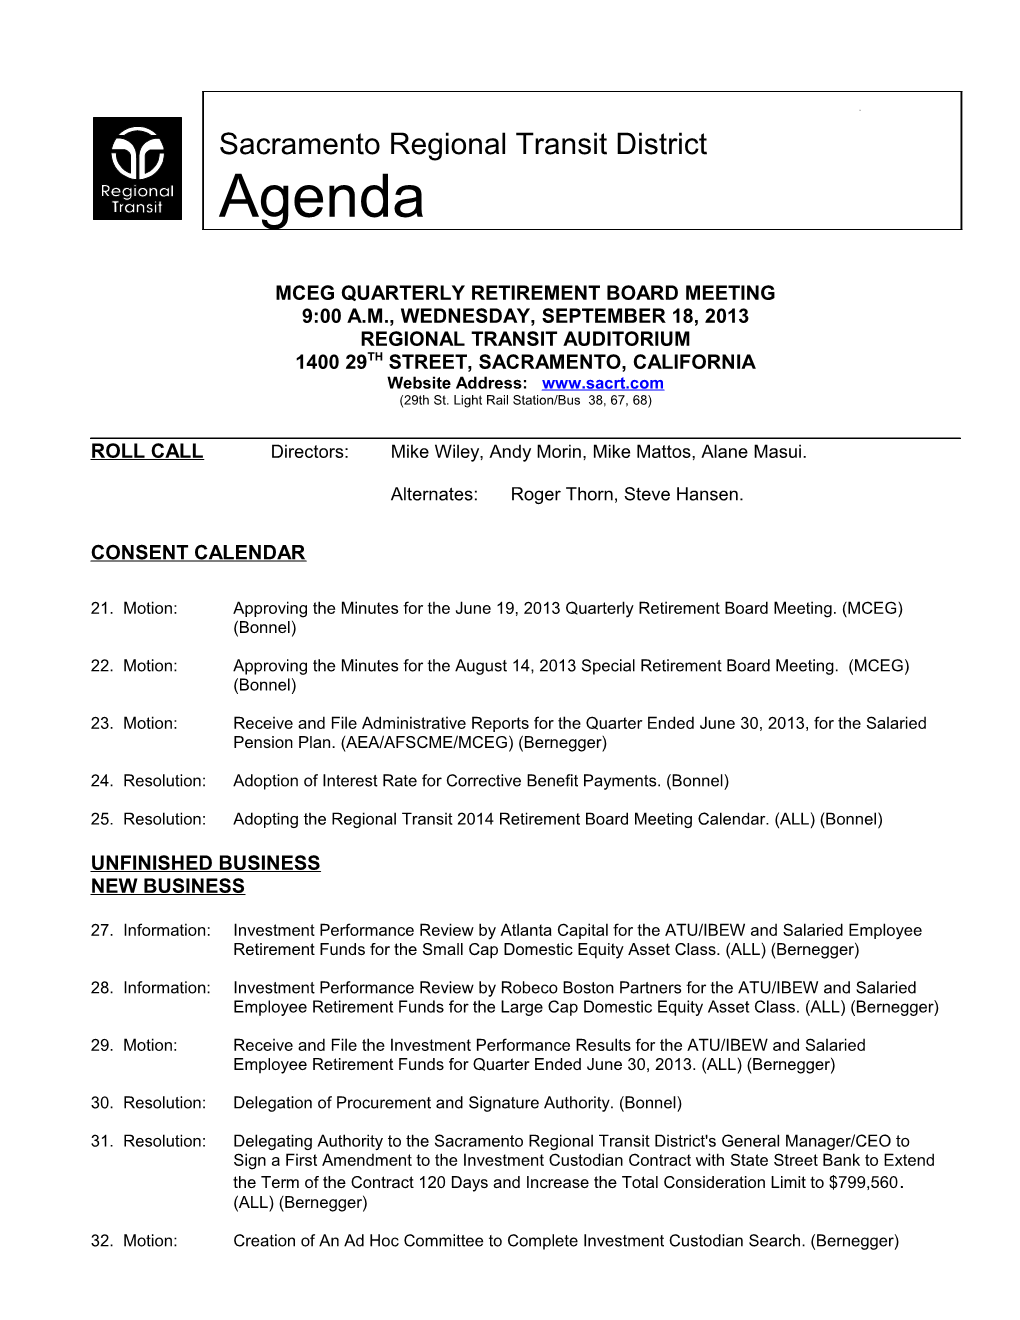 MCEG Quarterly Retirement Board Agenda 09.18.13